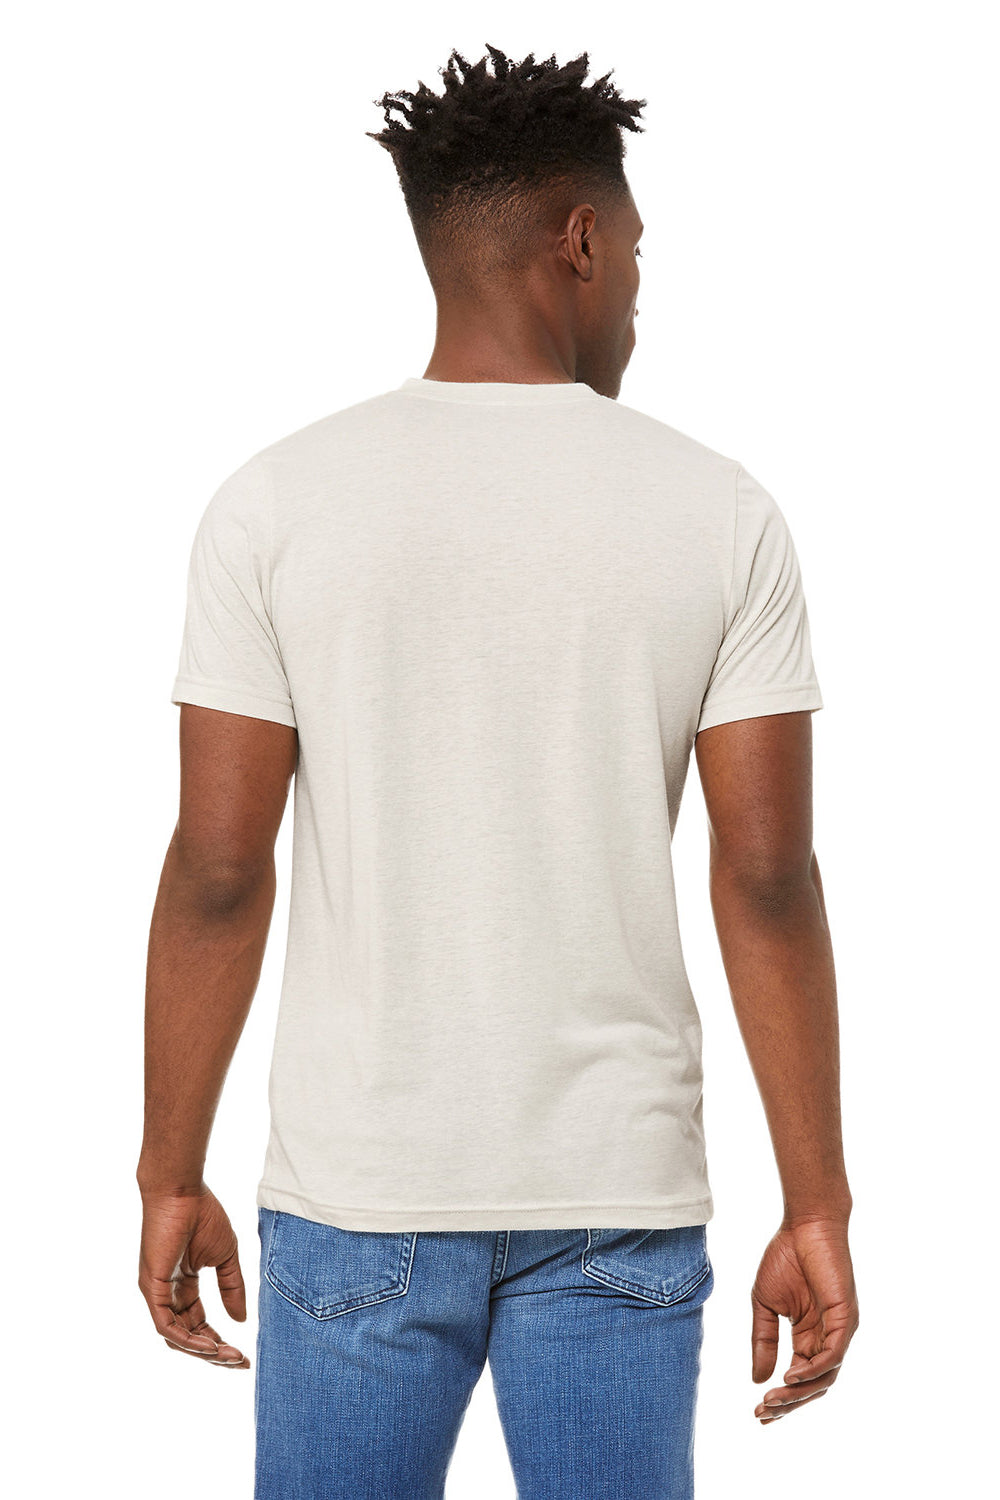 Bella + Canvas BC3415/3415C/3415 Mens Short Sleeve V-Neck T-Shirt Cement Grey Model Back